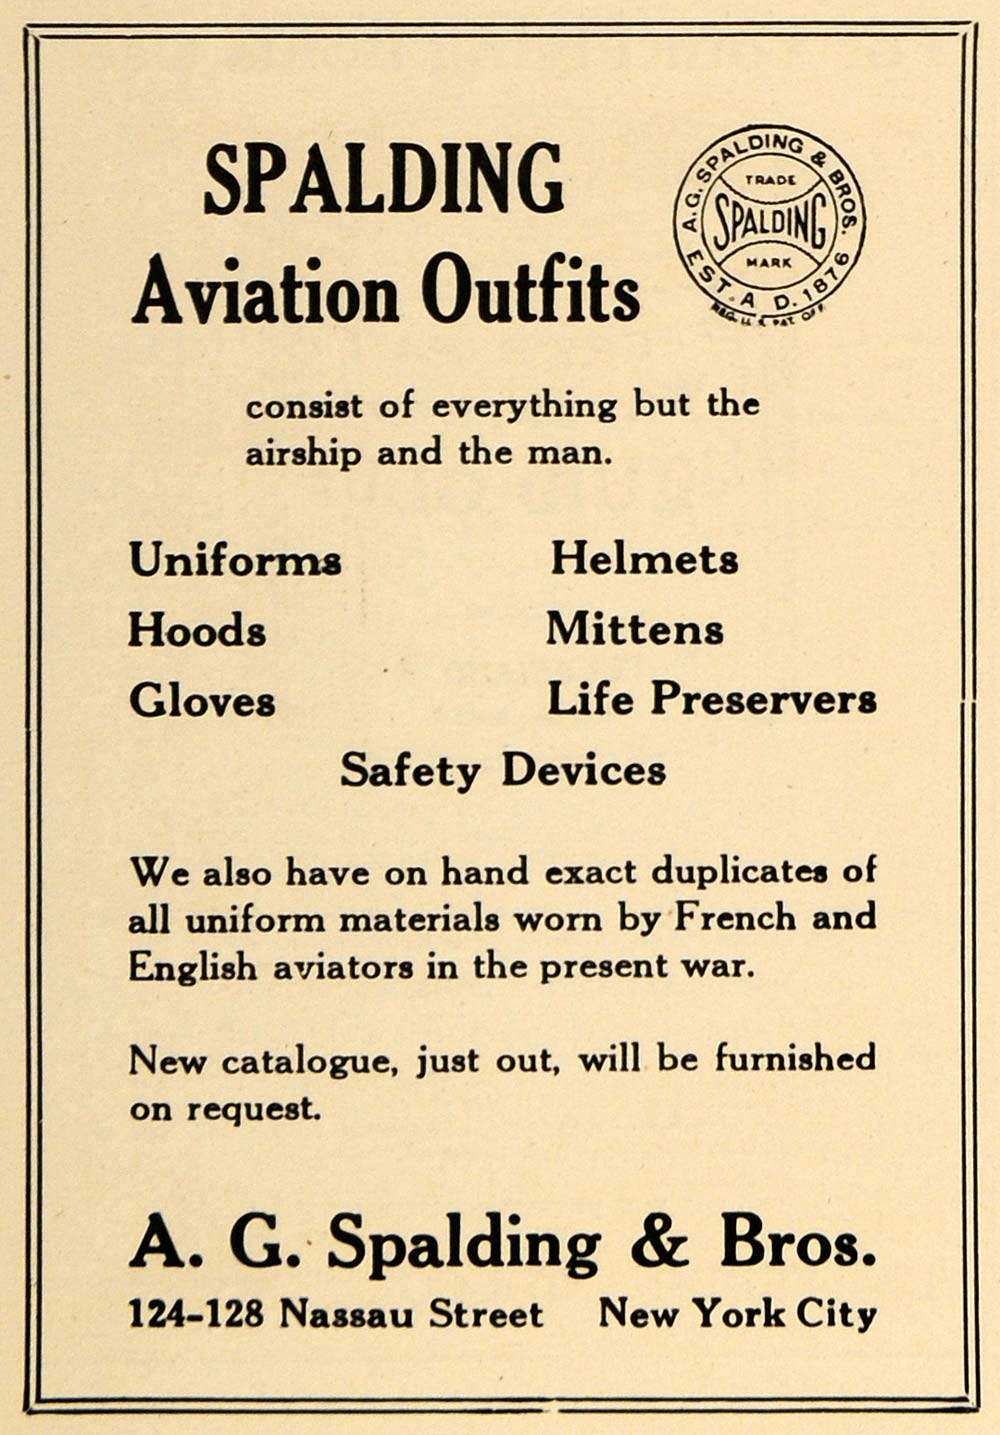 1920 Ad A.G. Spalding Aviation Outfits Uniforms Helmets - ORIGINAL FLY2